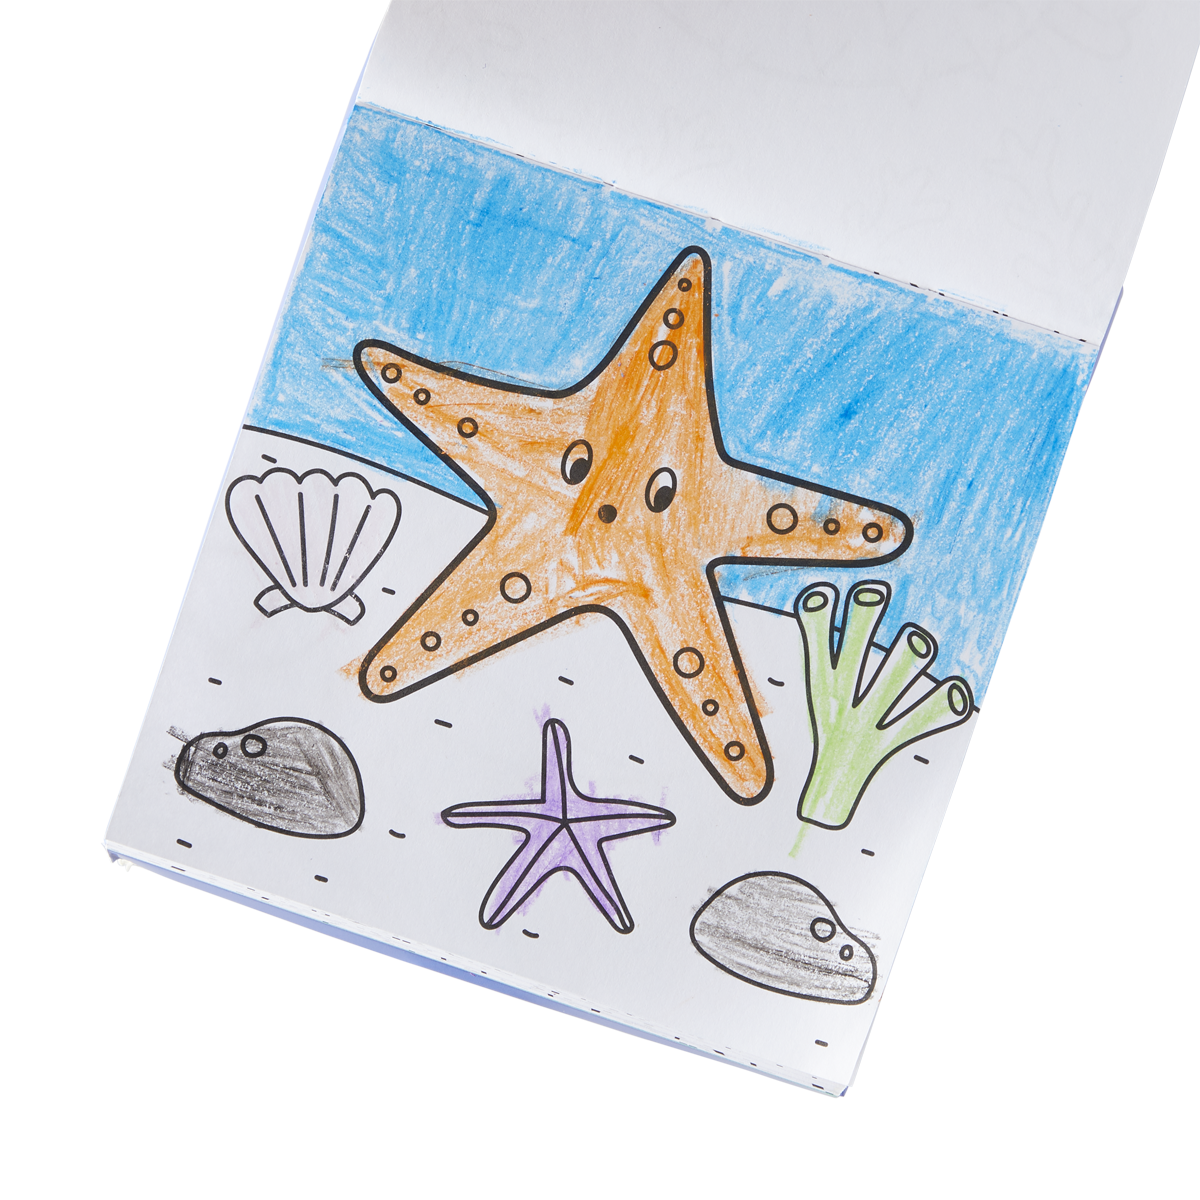 Kids Coloring Book Kit, Under The Sea | Arteza